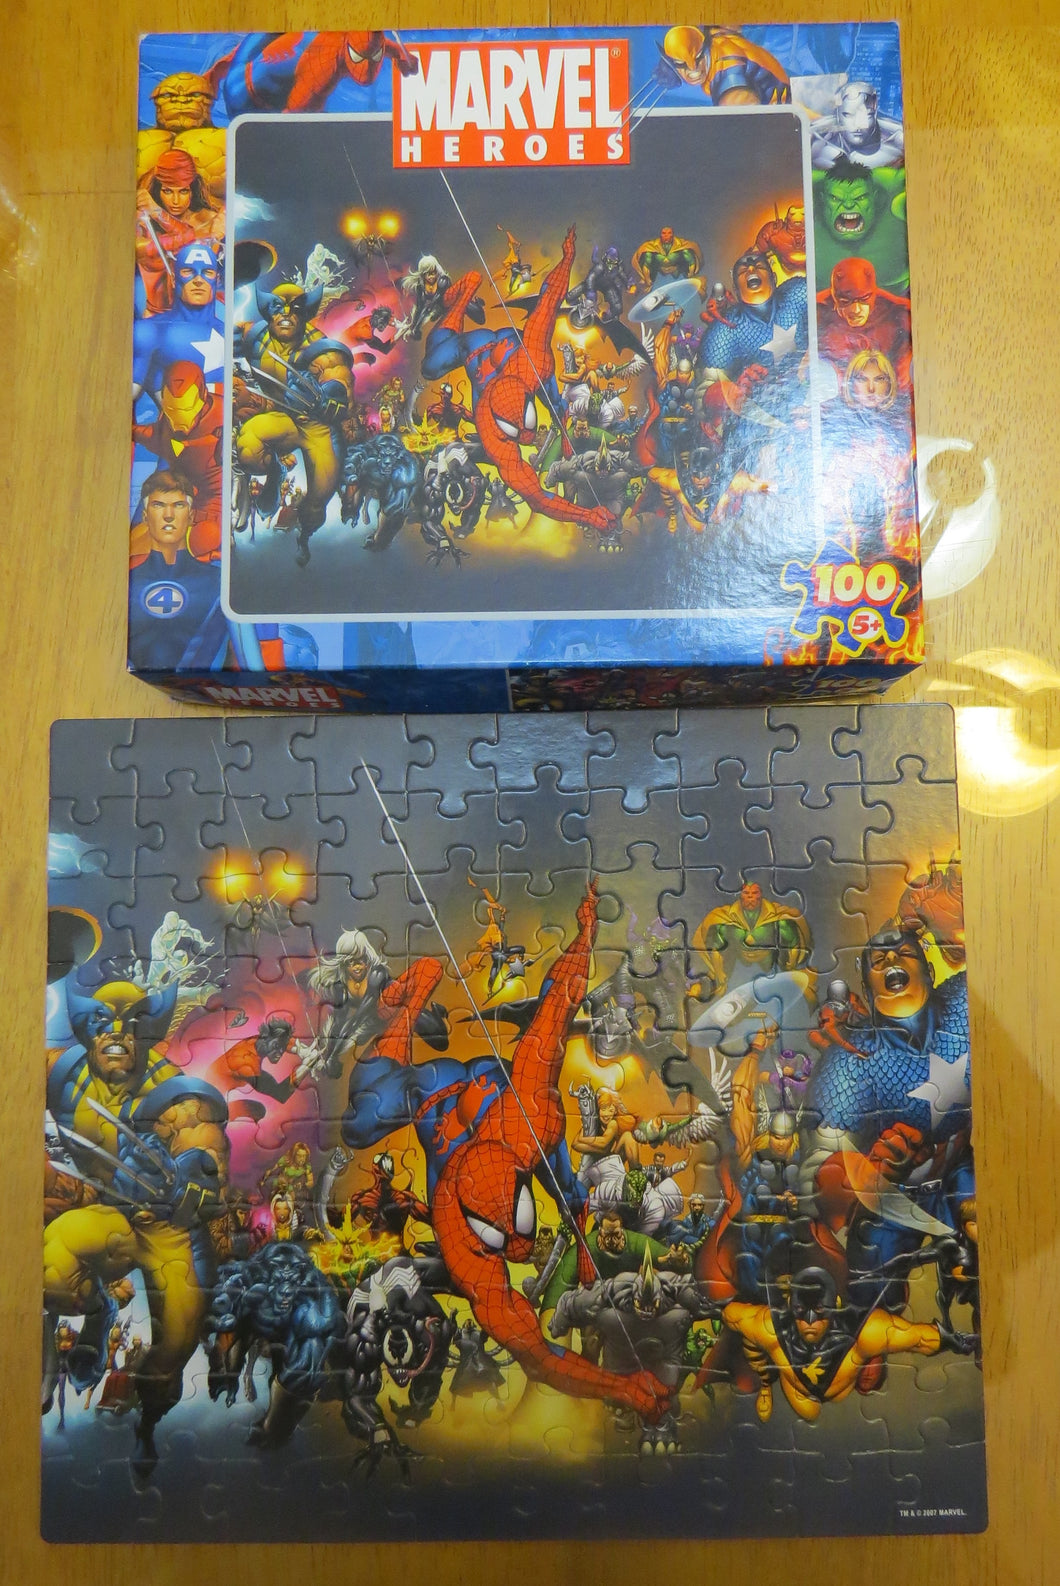 MARVEL HEROES - 100 mcx puzzle complete w box